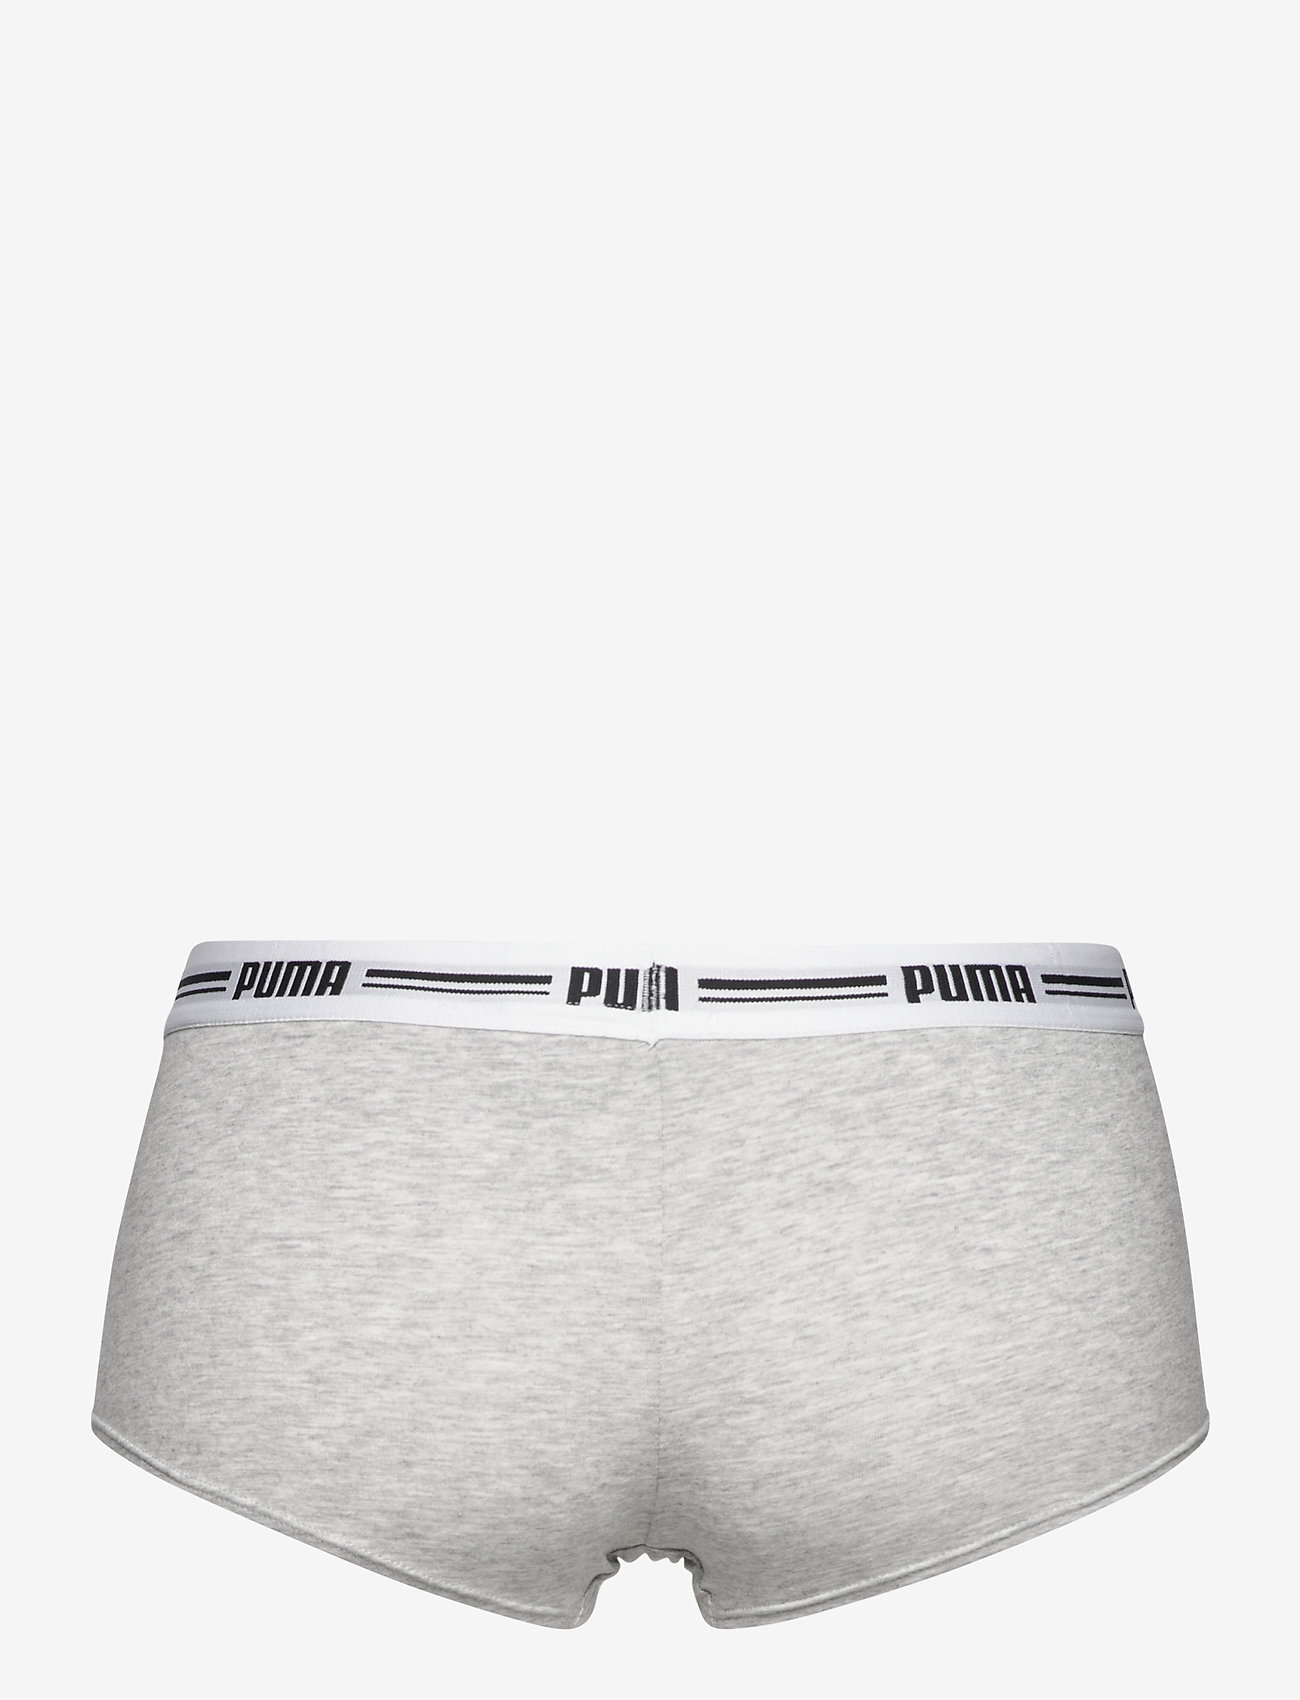 Puma Womens Ladies Panties Boxers Mini Short 2 Pack Underwear